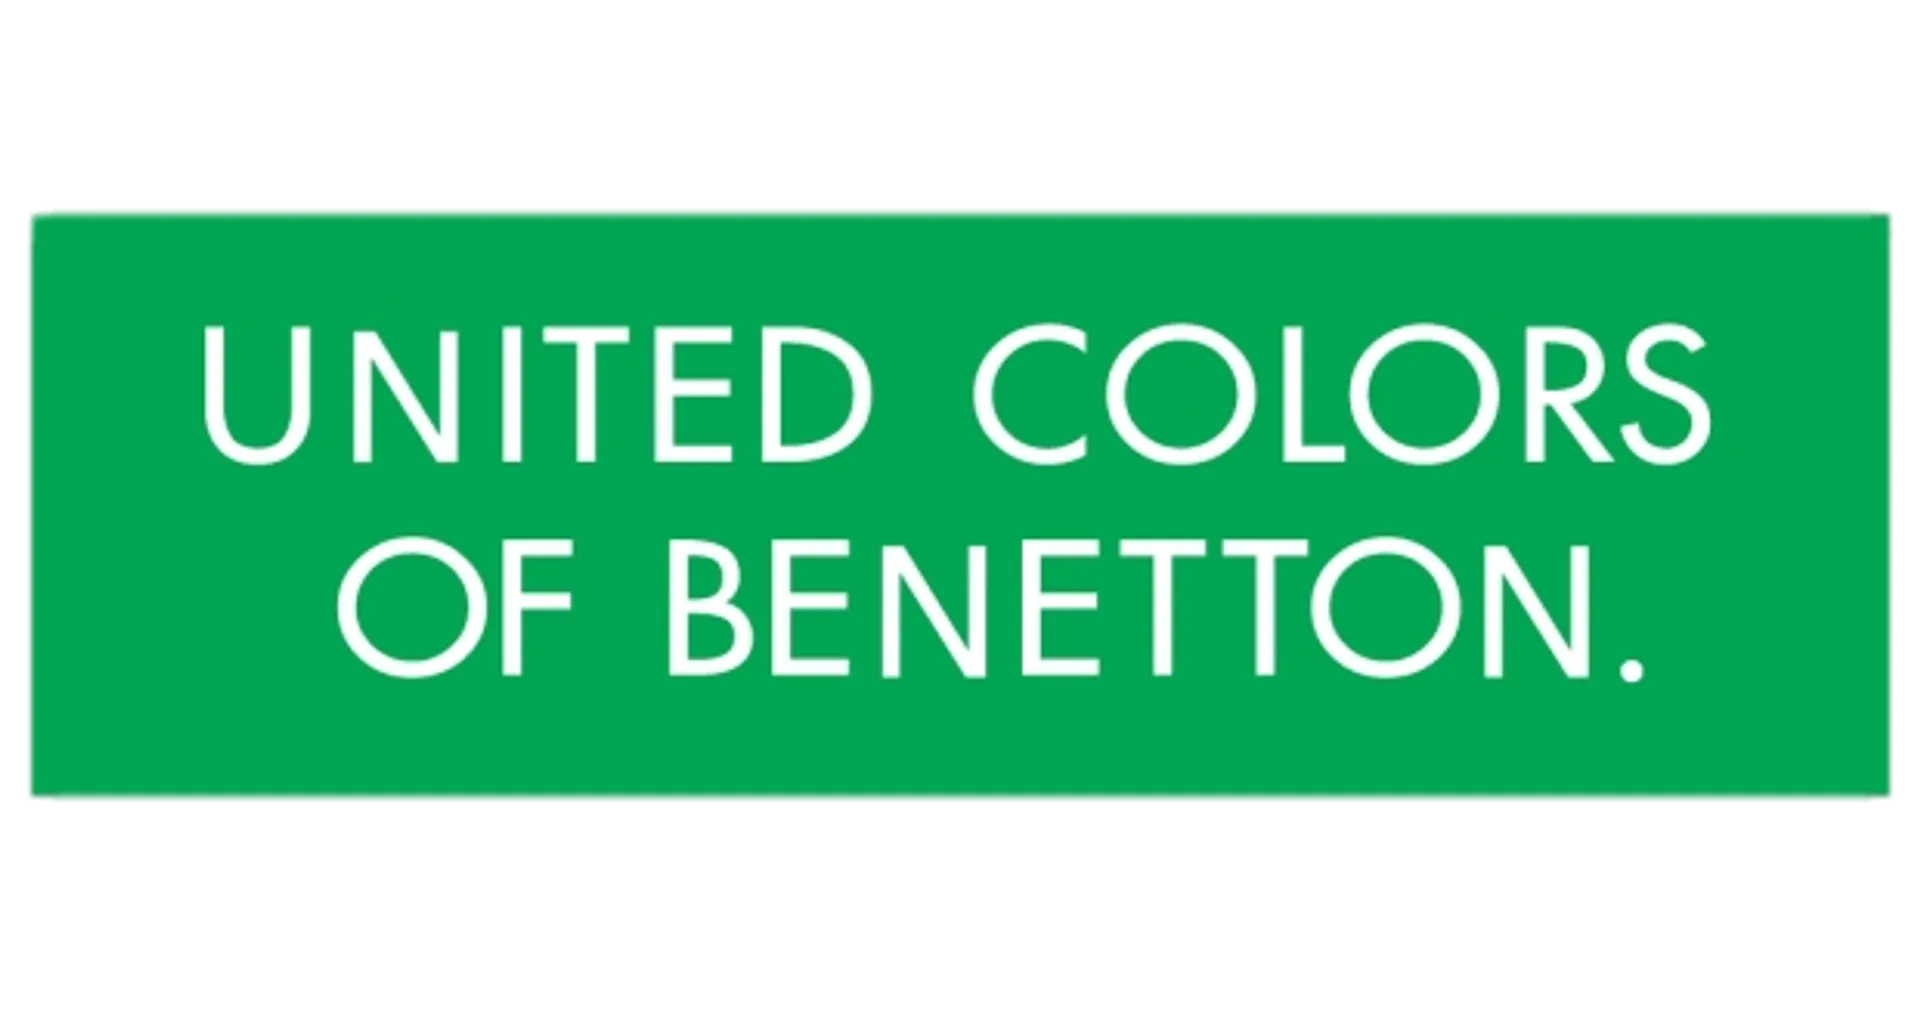 UNITED COLORS OF BENETTON logo